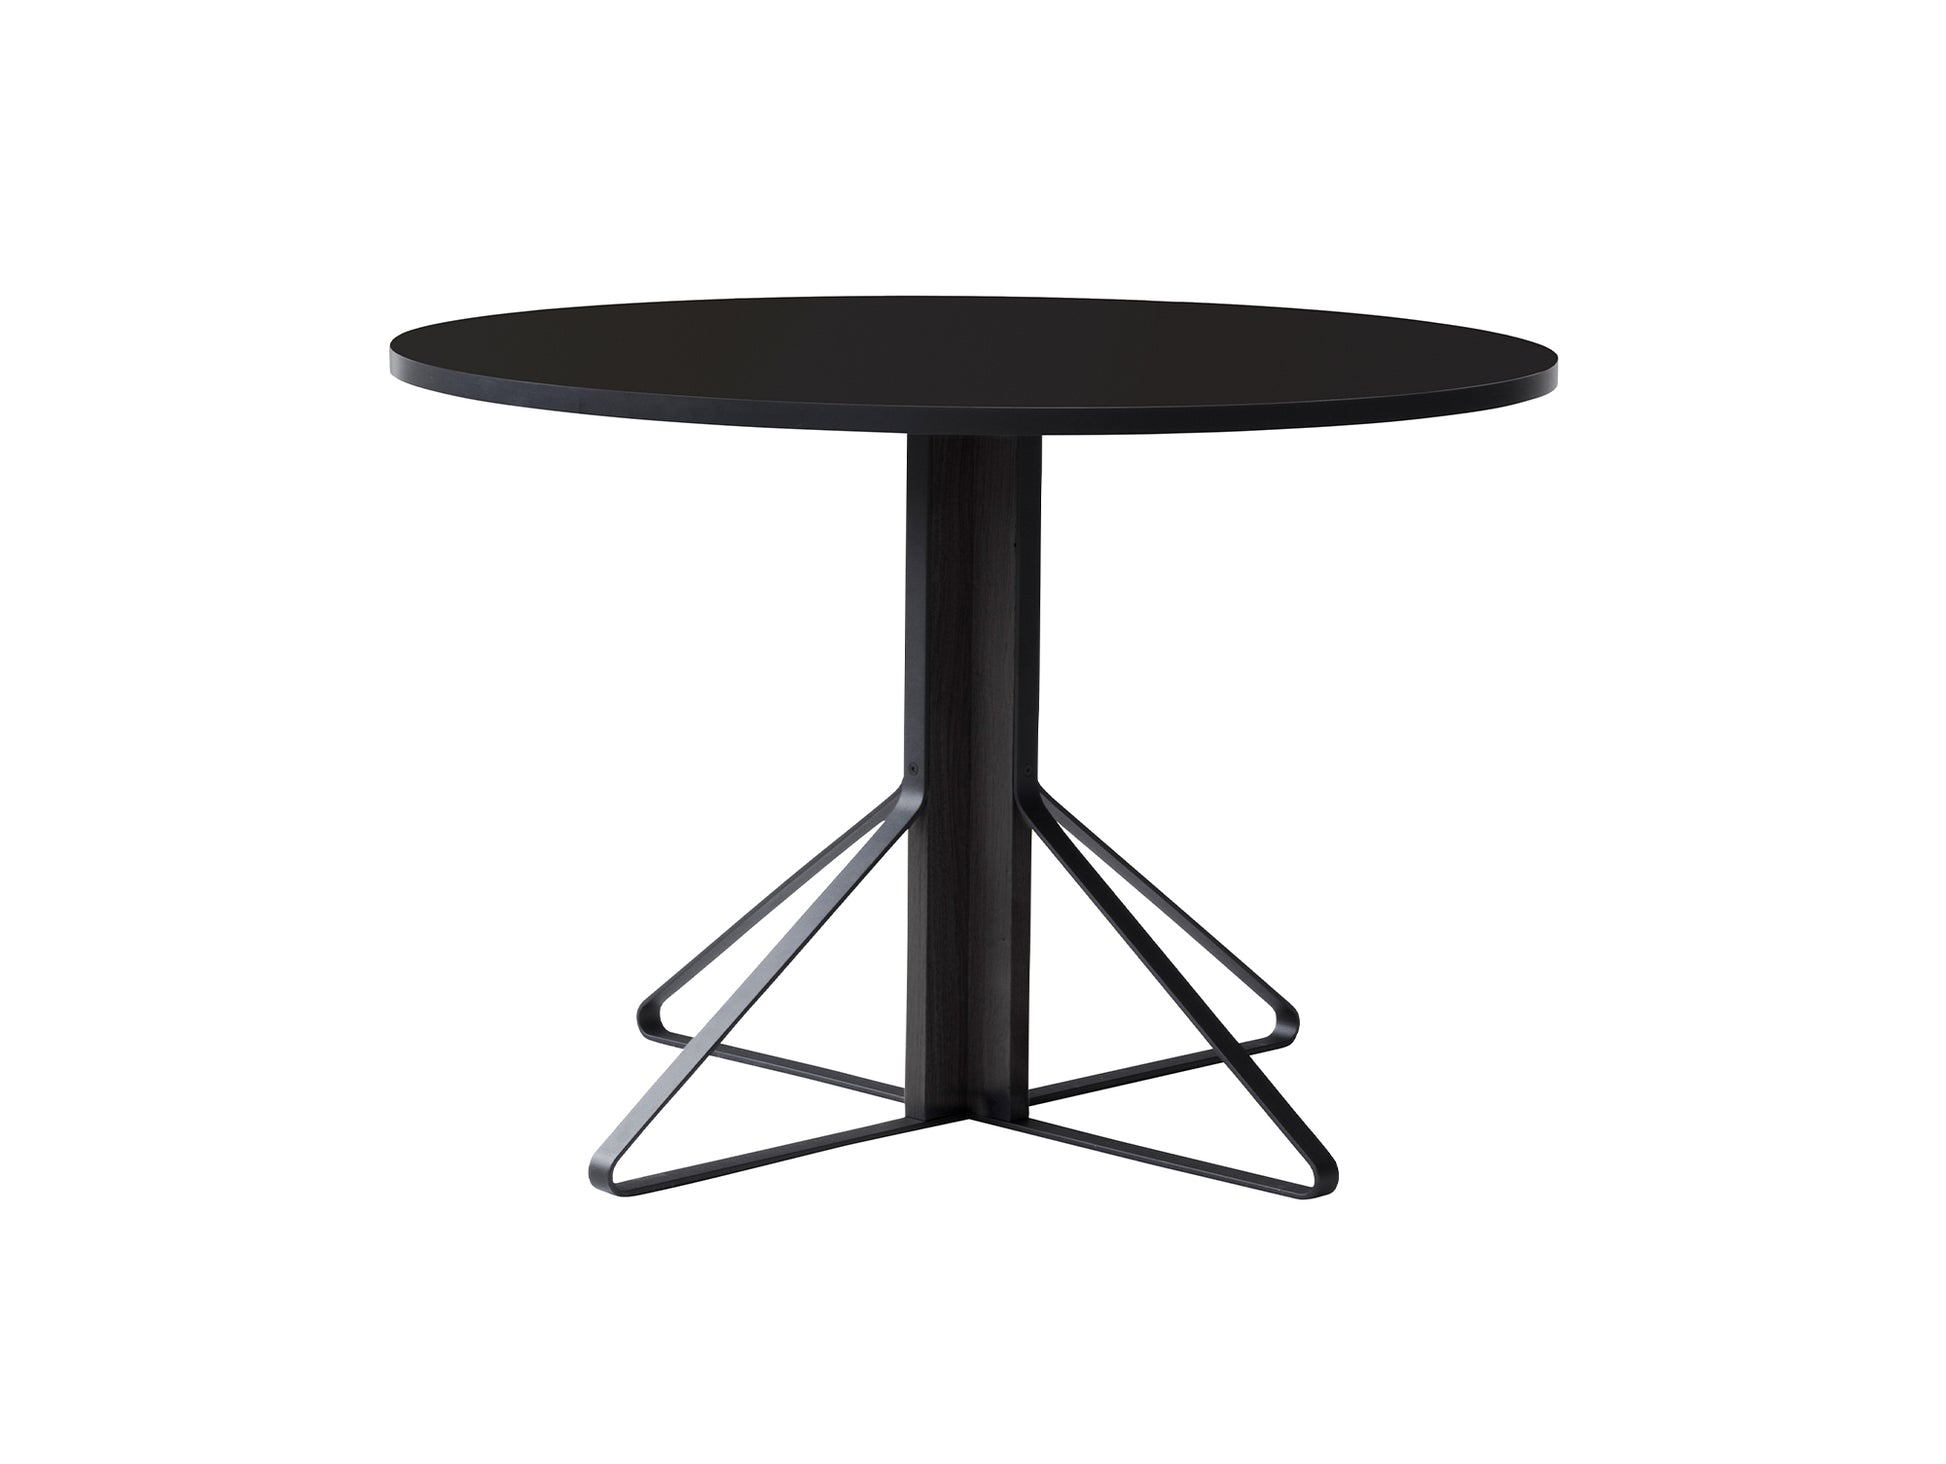 Kaari Table Round by Artek - Tabletop Diameter: 110 cm (REB 004) / Black Gloss HPL Tabletop / Black Lacquered Oak Base